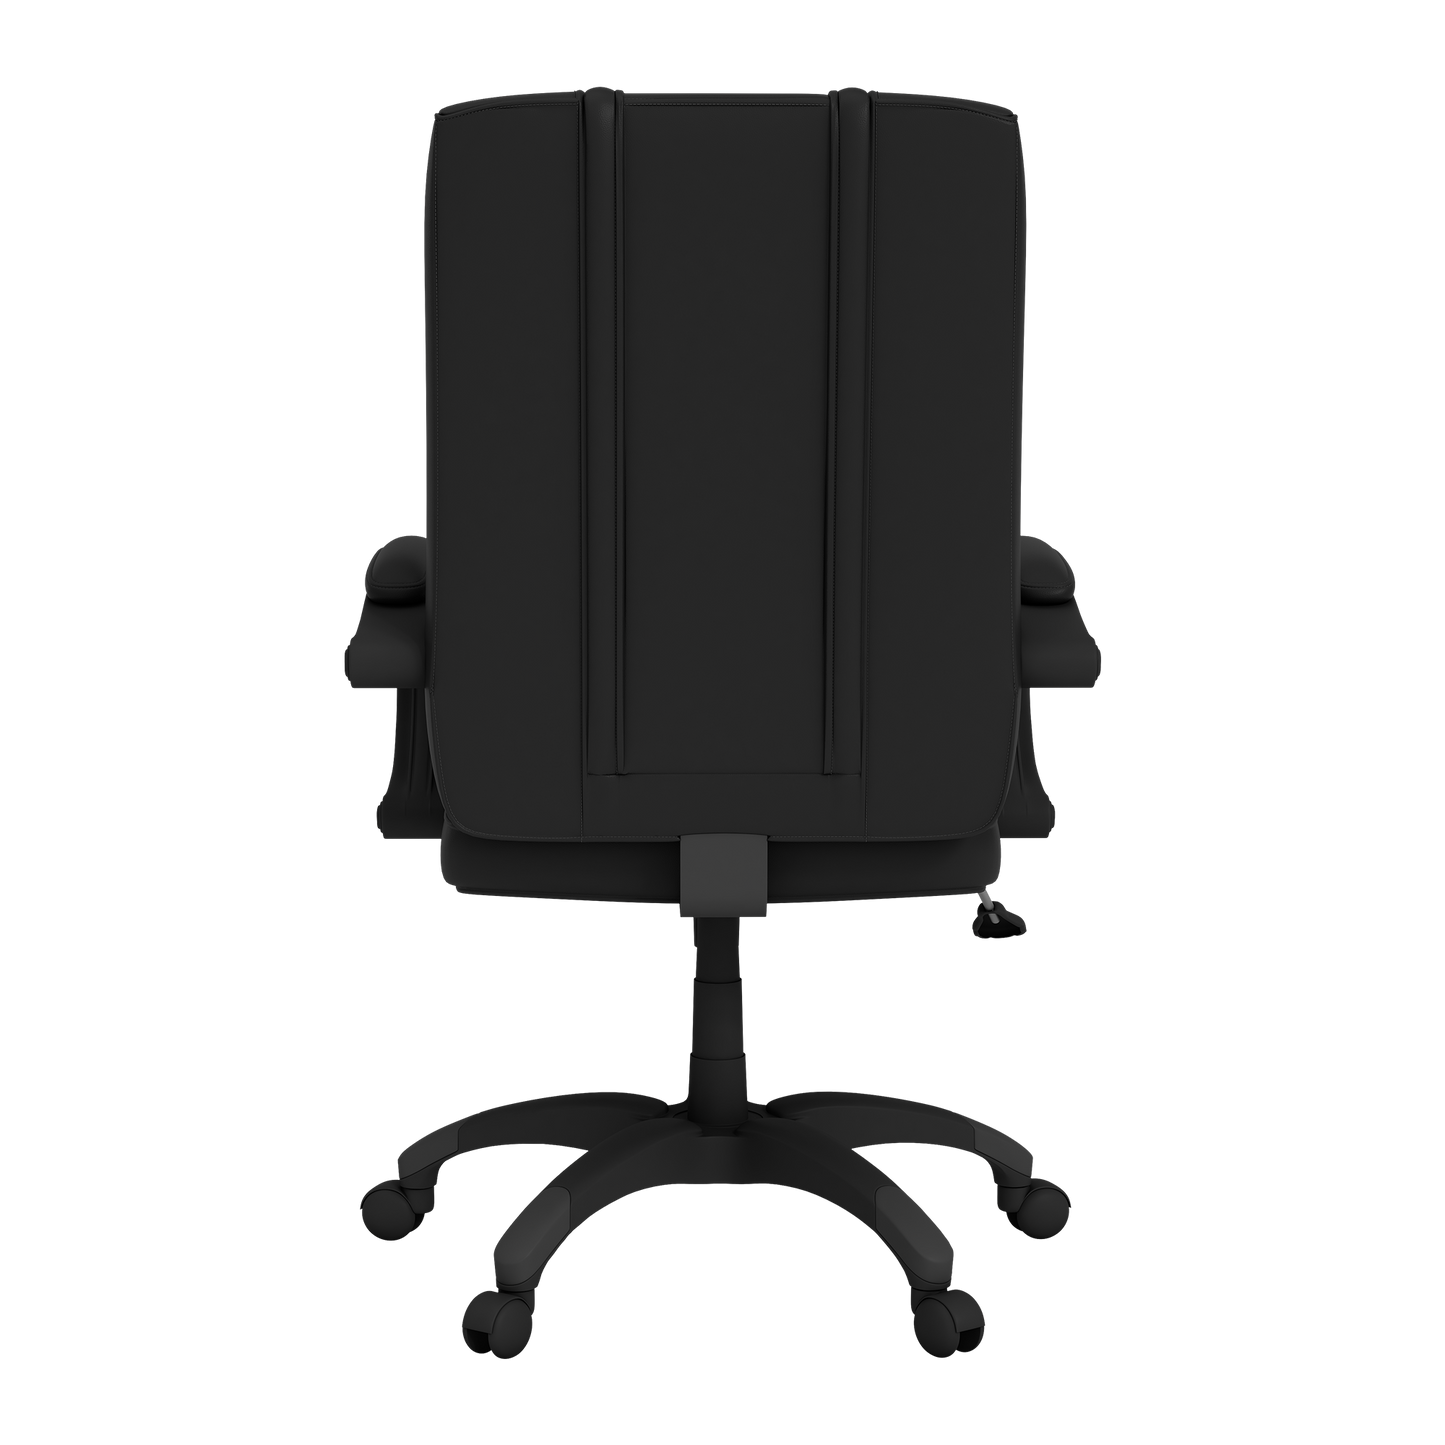 Office Chair 1000 with Anaheim Ducks Logo